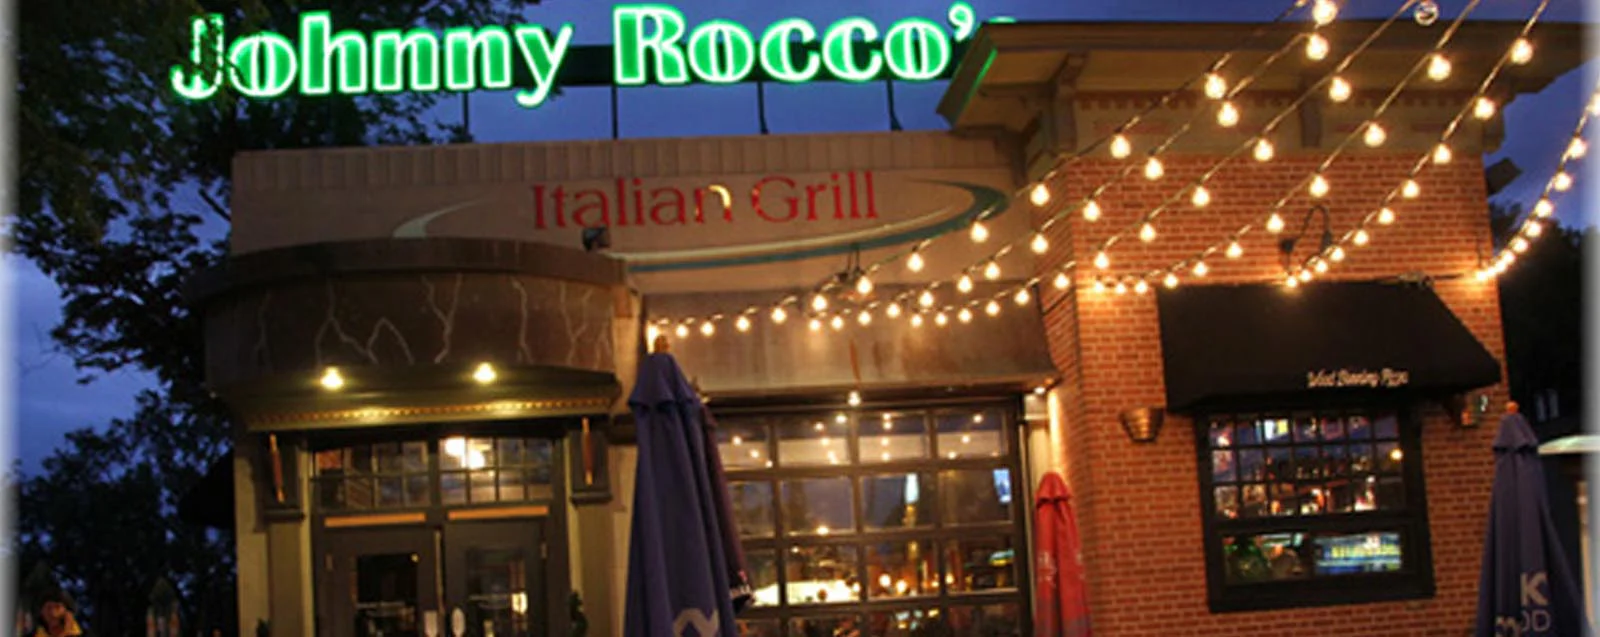 Johnny Rocco’s Italian Grill